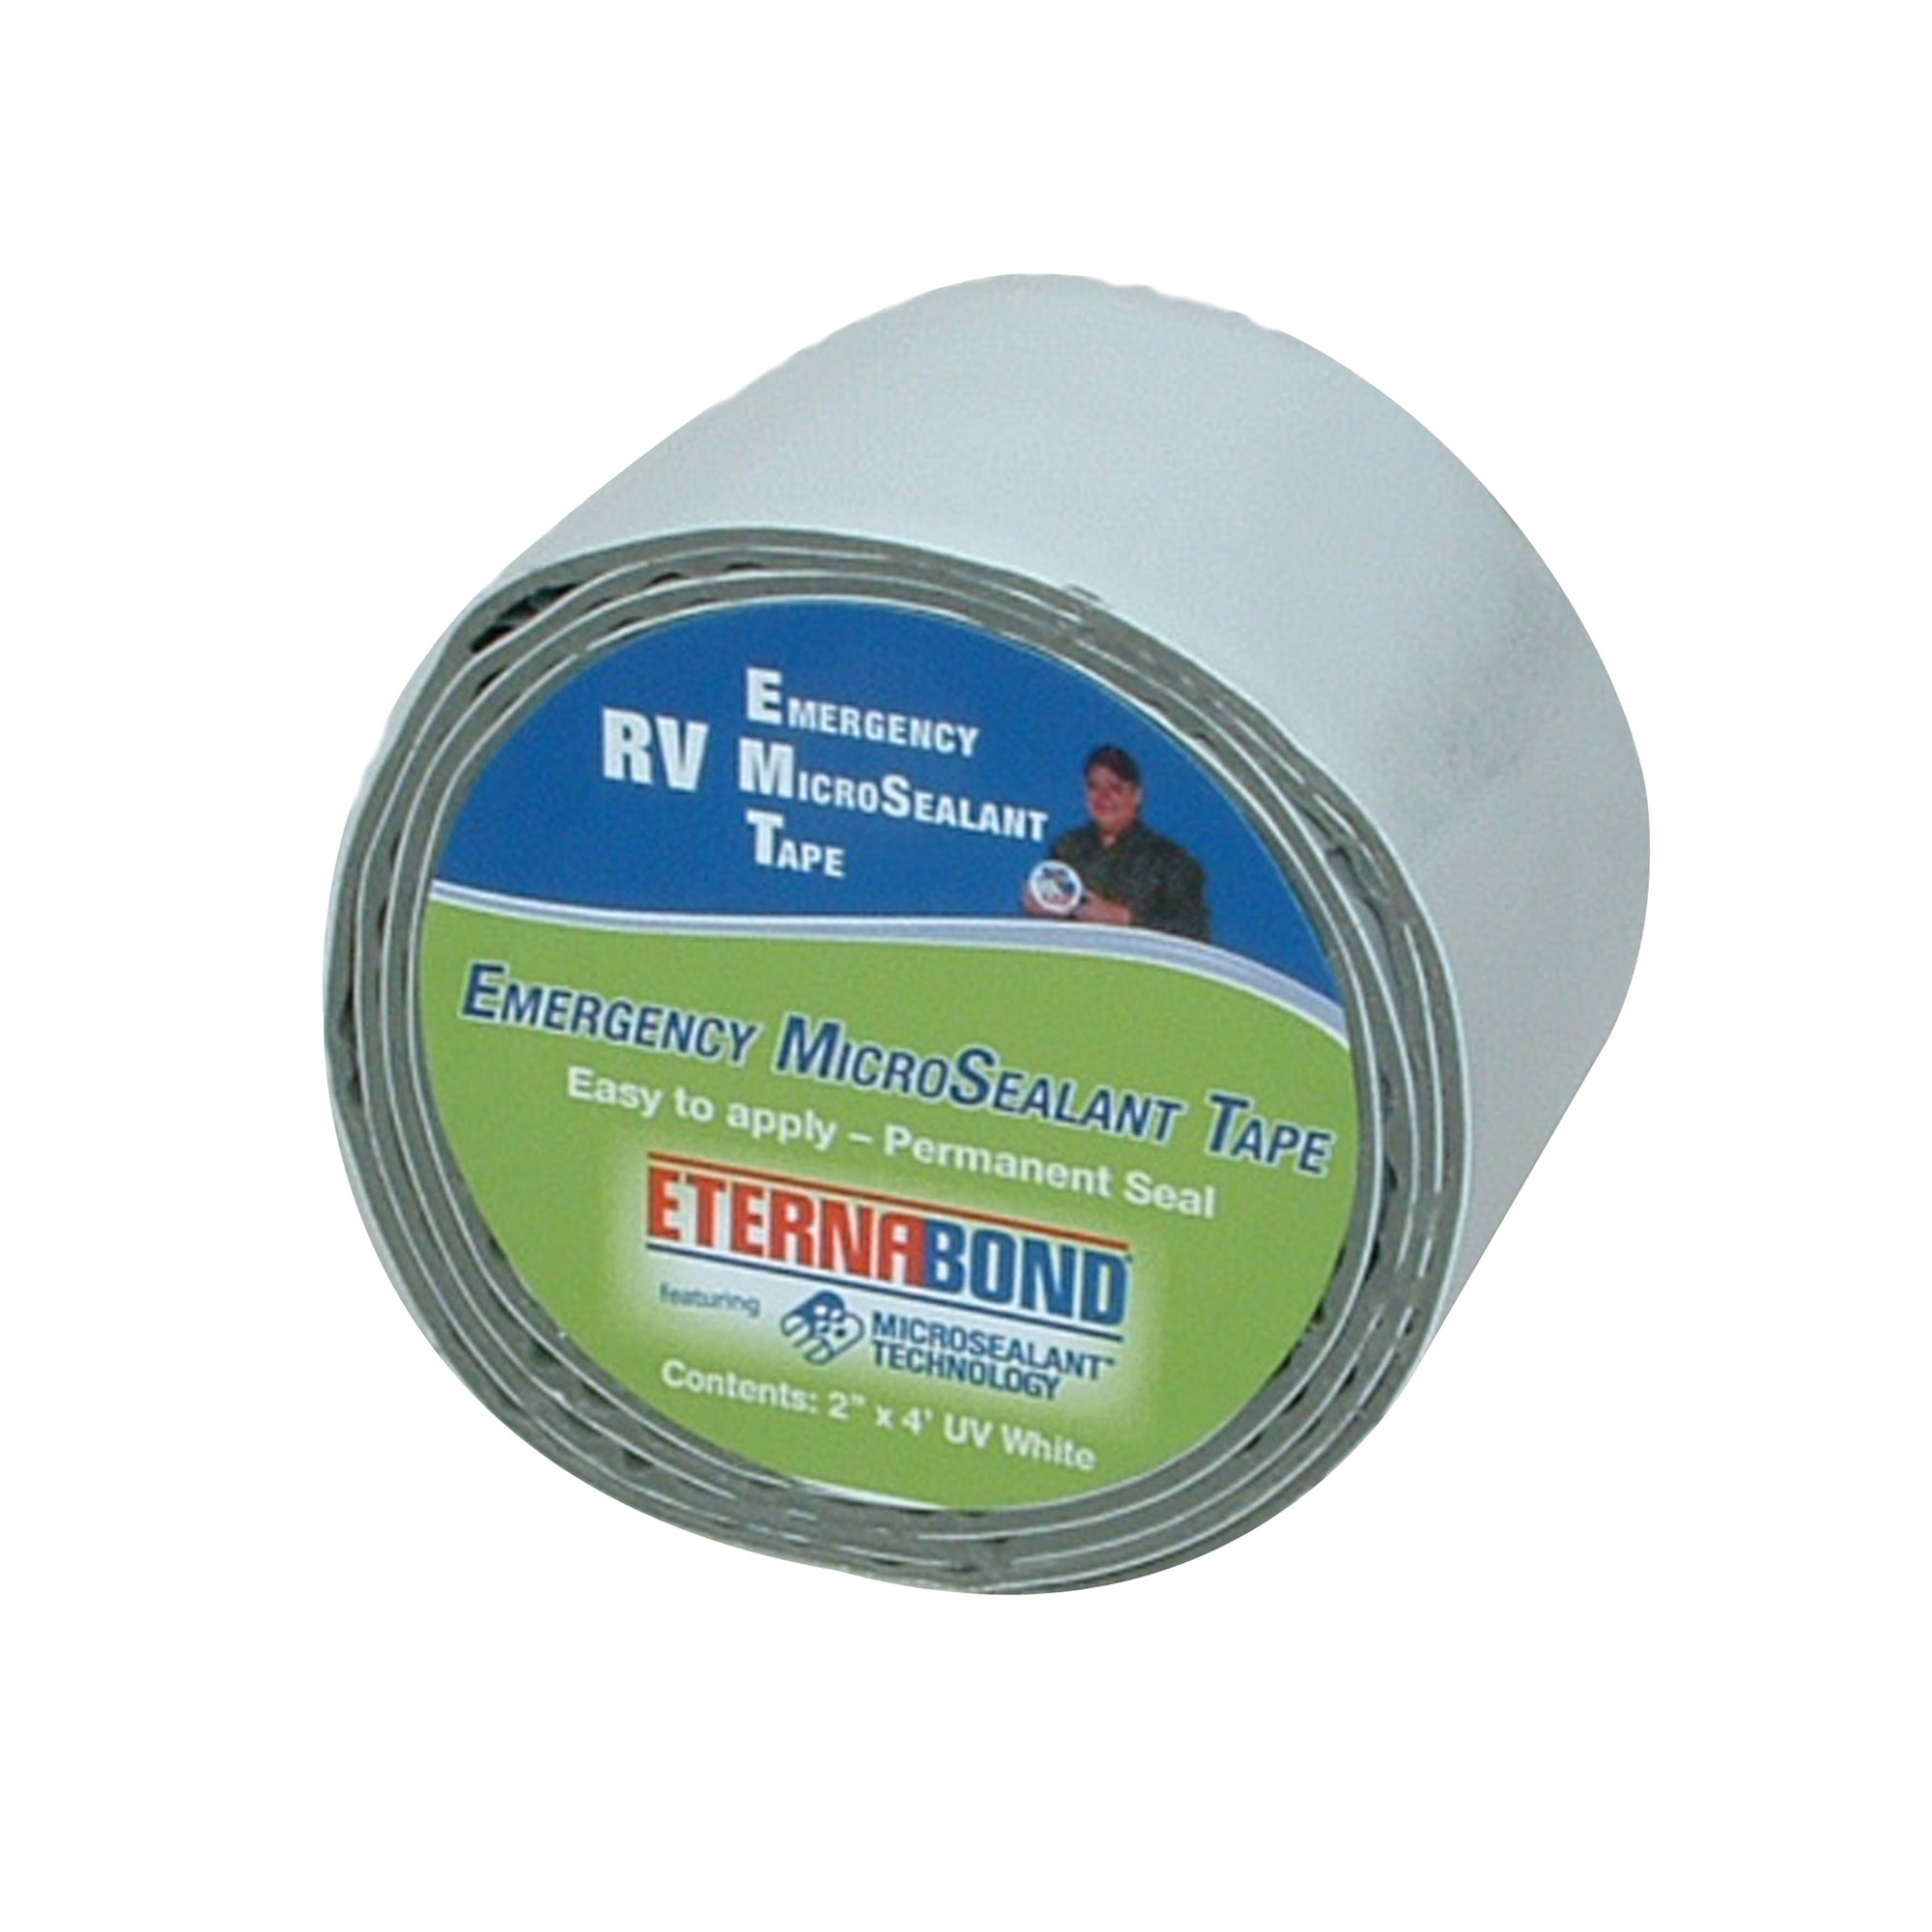 EternaBond RV-EMT-40BPOP RV Emergency Microsealant Tape - 2" x 48", 40 Count Bucket